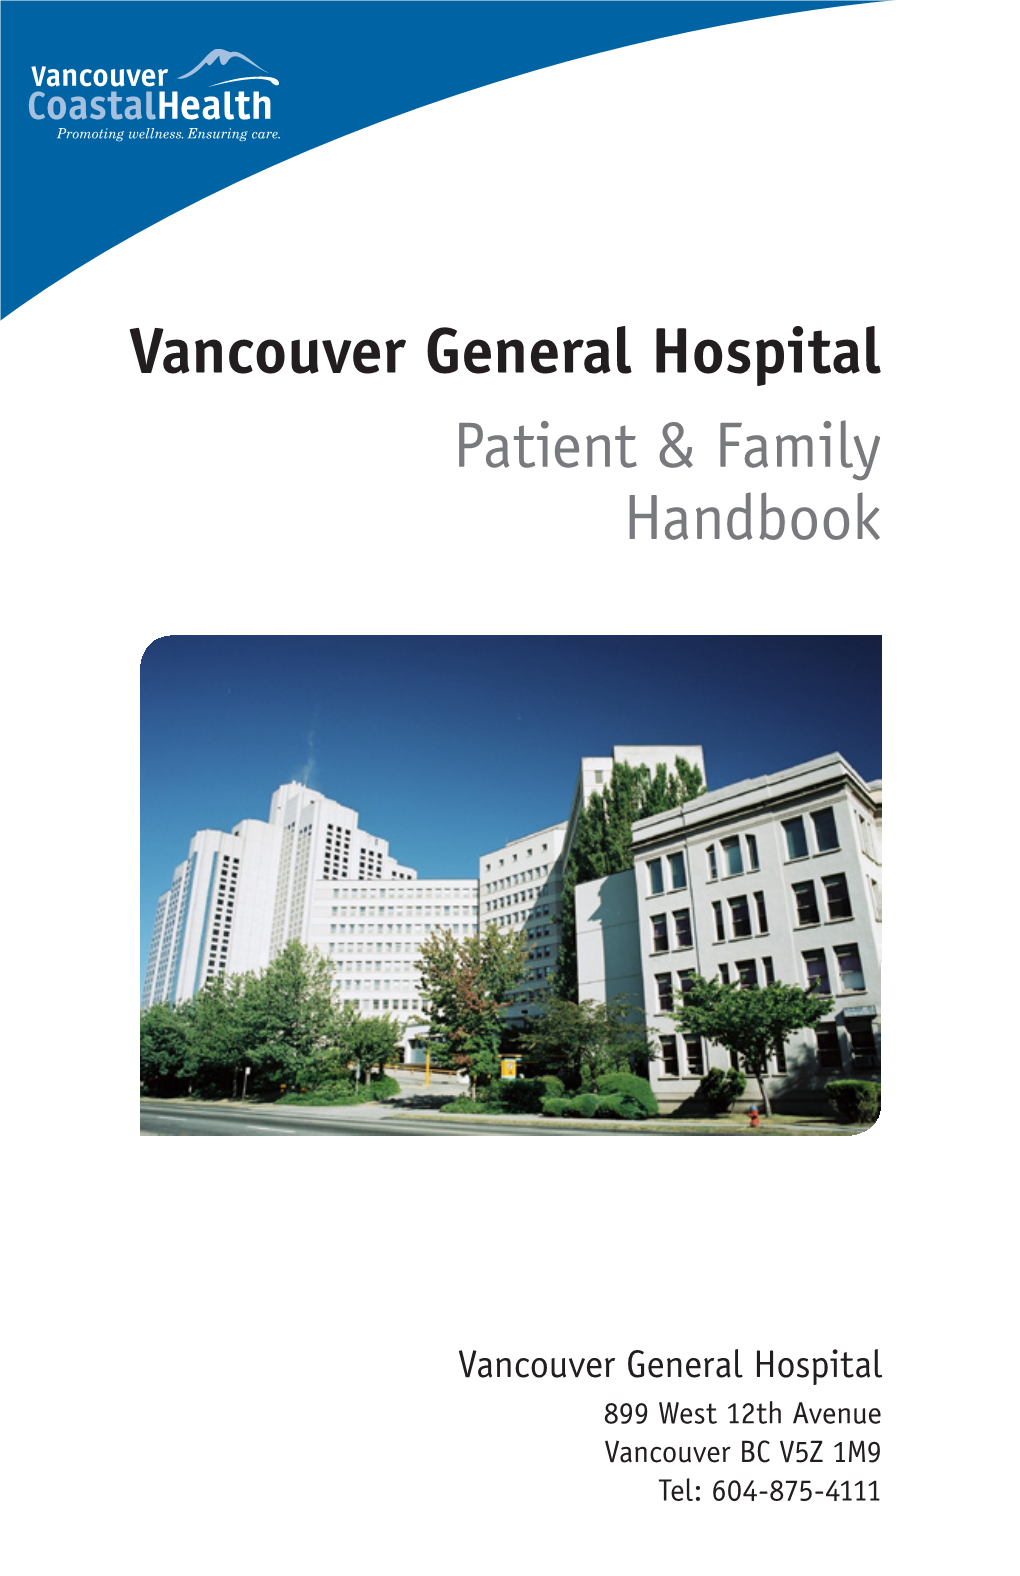 Vancouver General Hospital Patient & Family Handbook